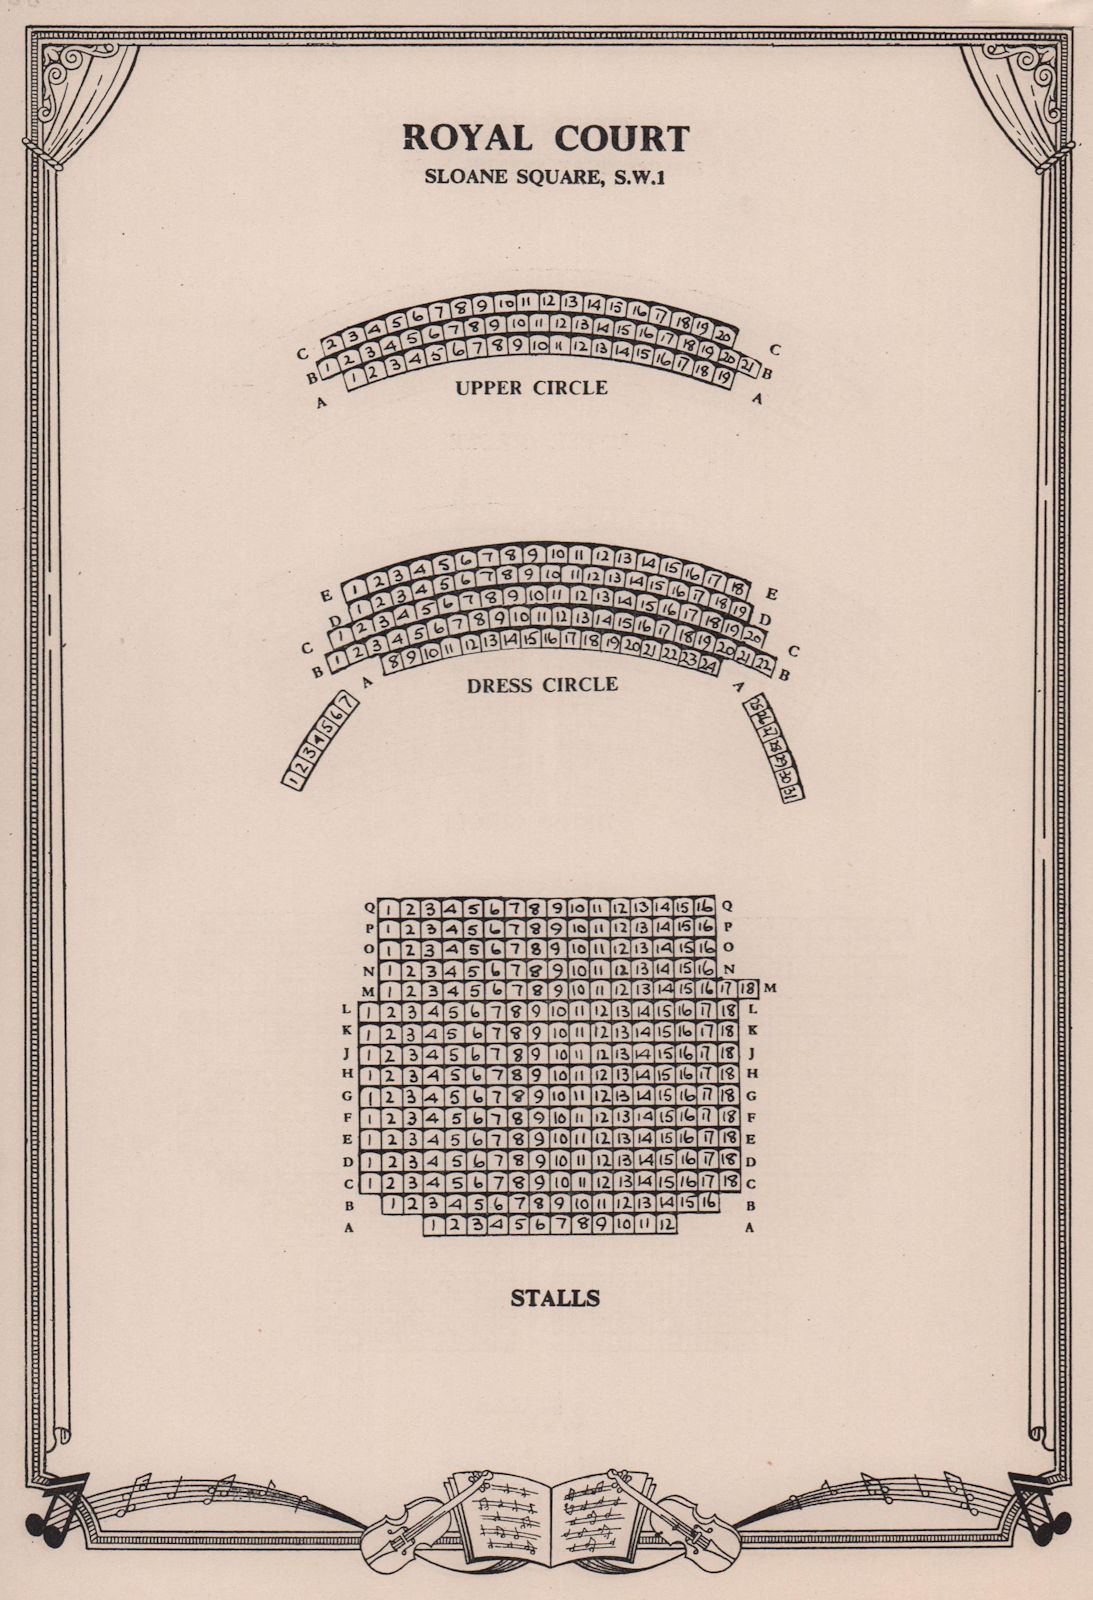 Associate Product Royal Court Theatre, Sloane Square, London. Vintage seating plan 1955 print